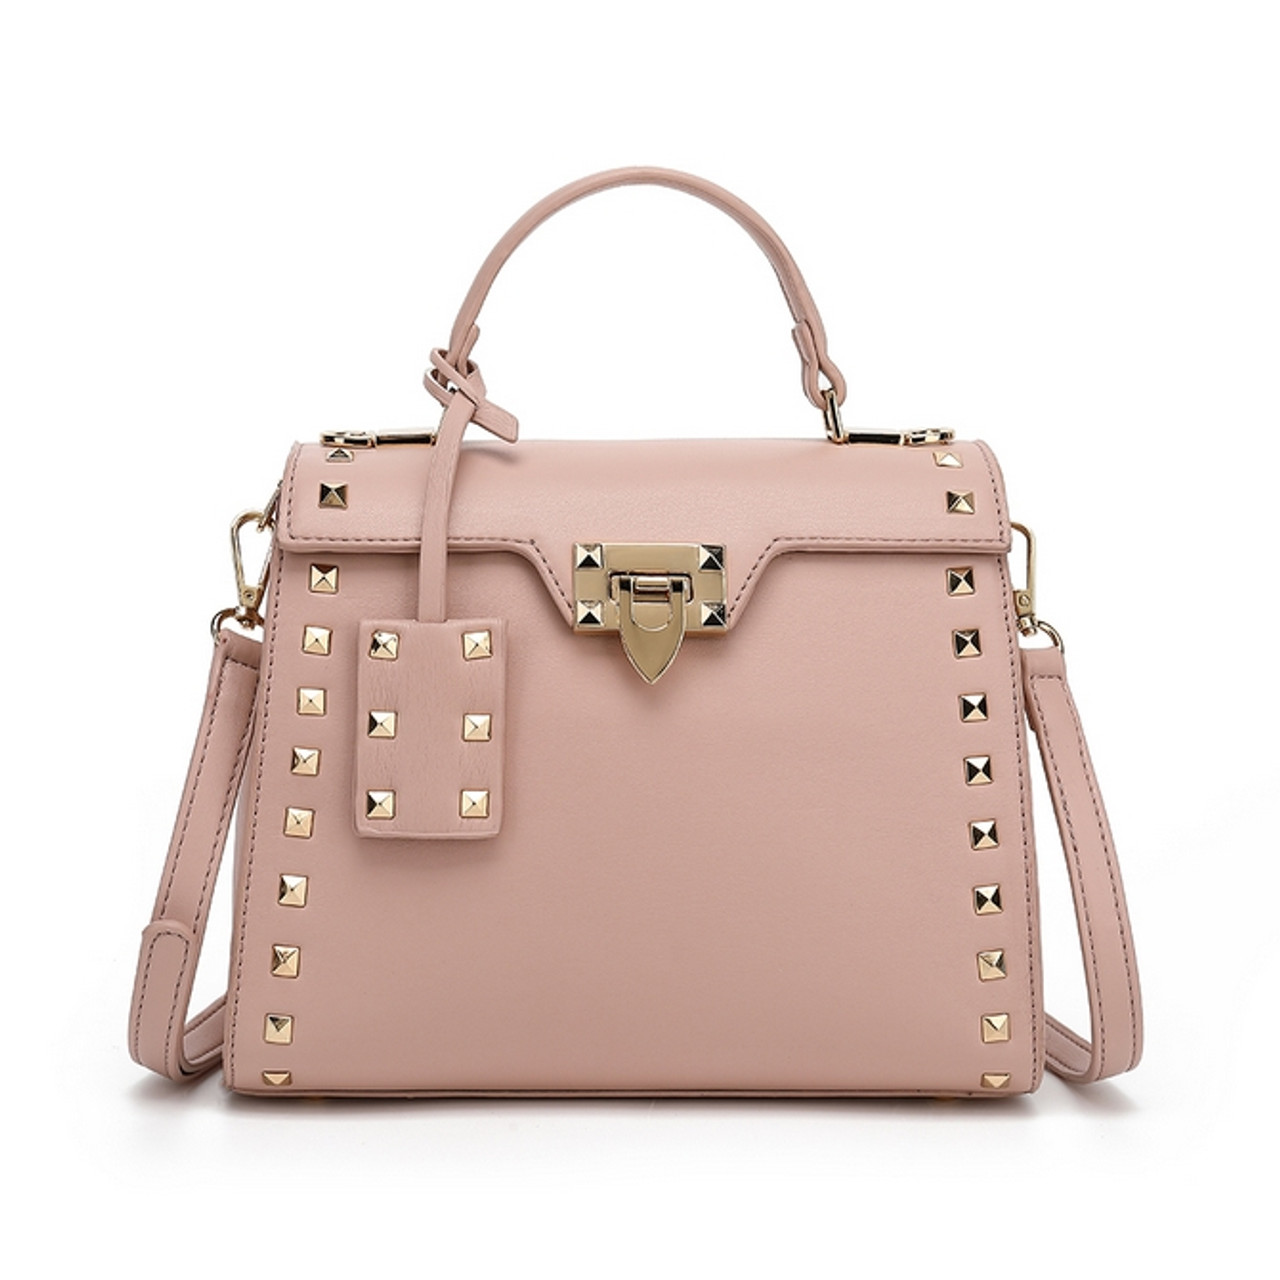 Lara Studded Top Handle Bag - Pink